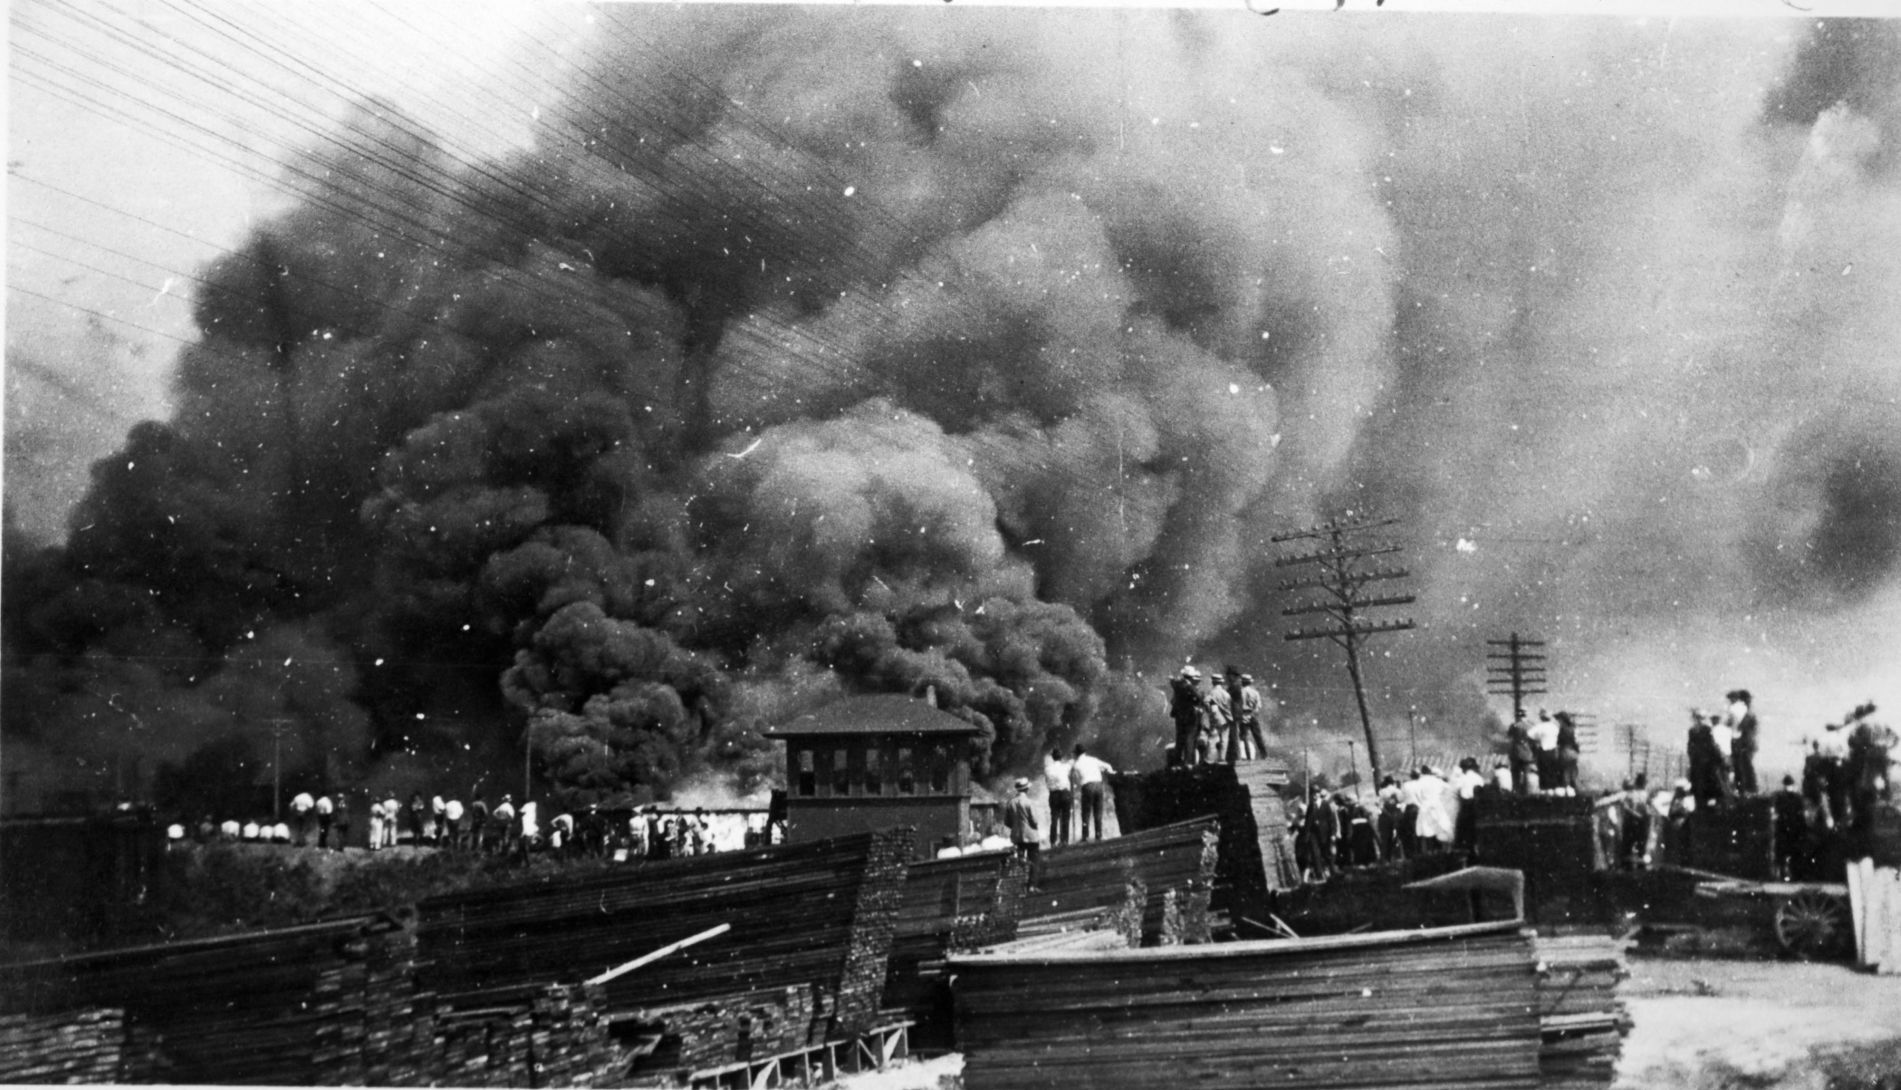 Refugees of Tulsa Race Riots PHOTO 1921 Black Segregation Civil Rights Jim Crow